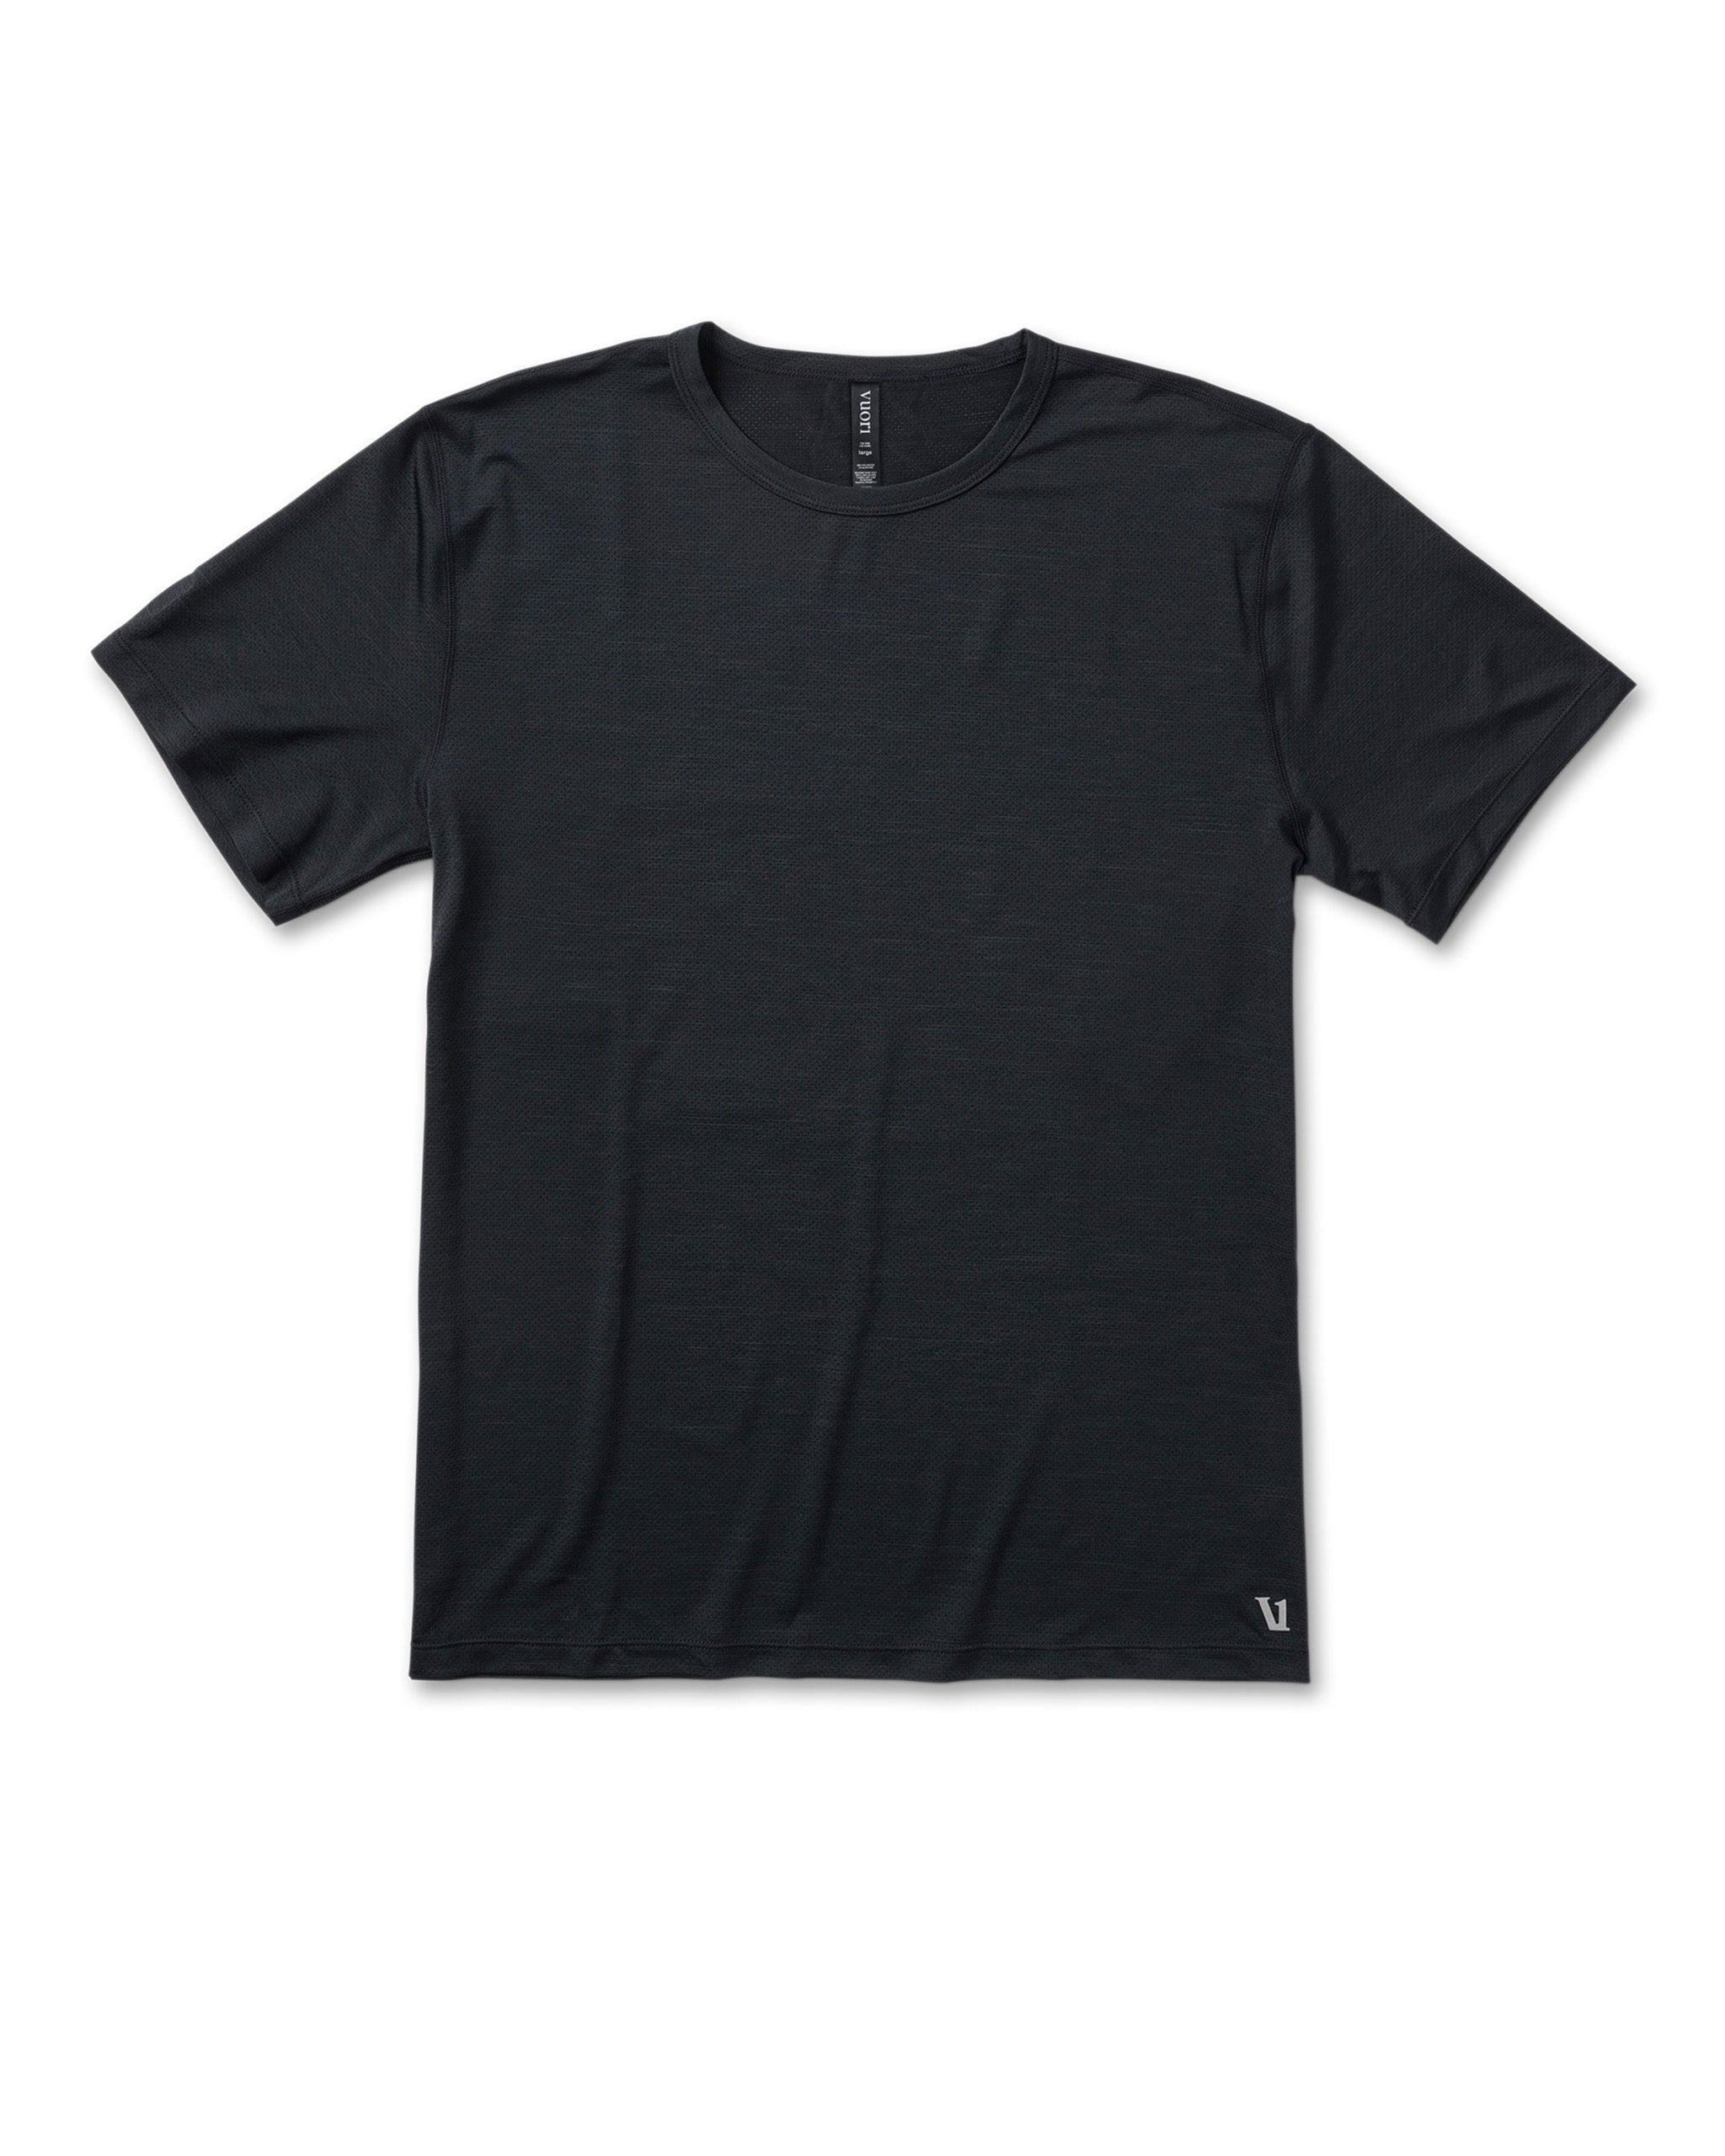 Zephyr Tee | Men's Heather Grey T-Shirt | Vuori